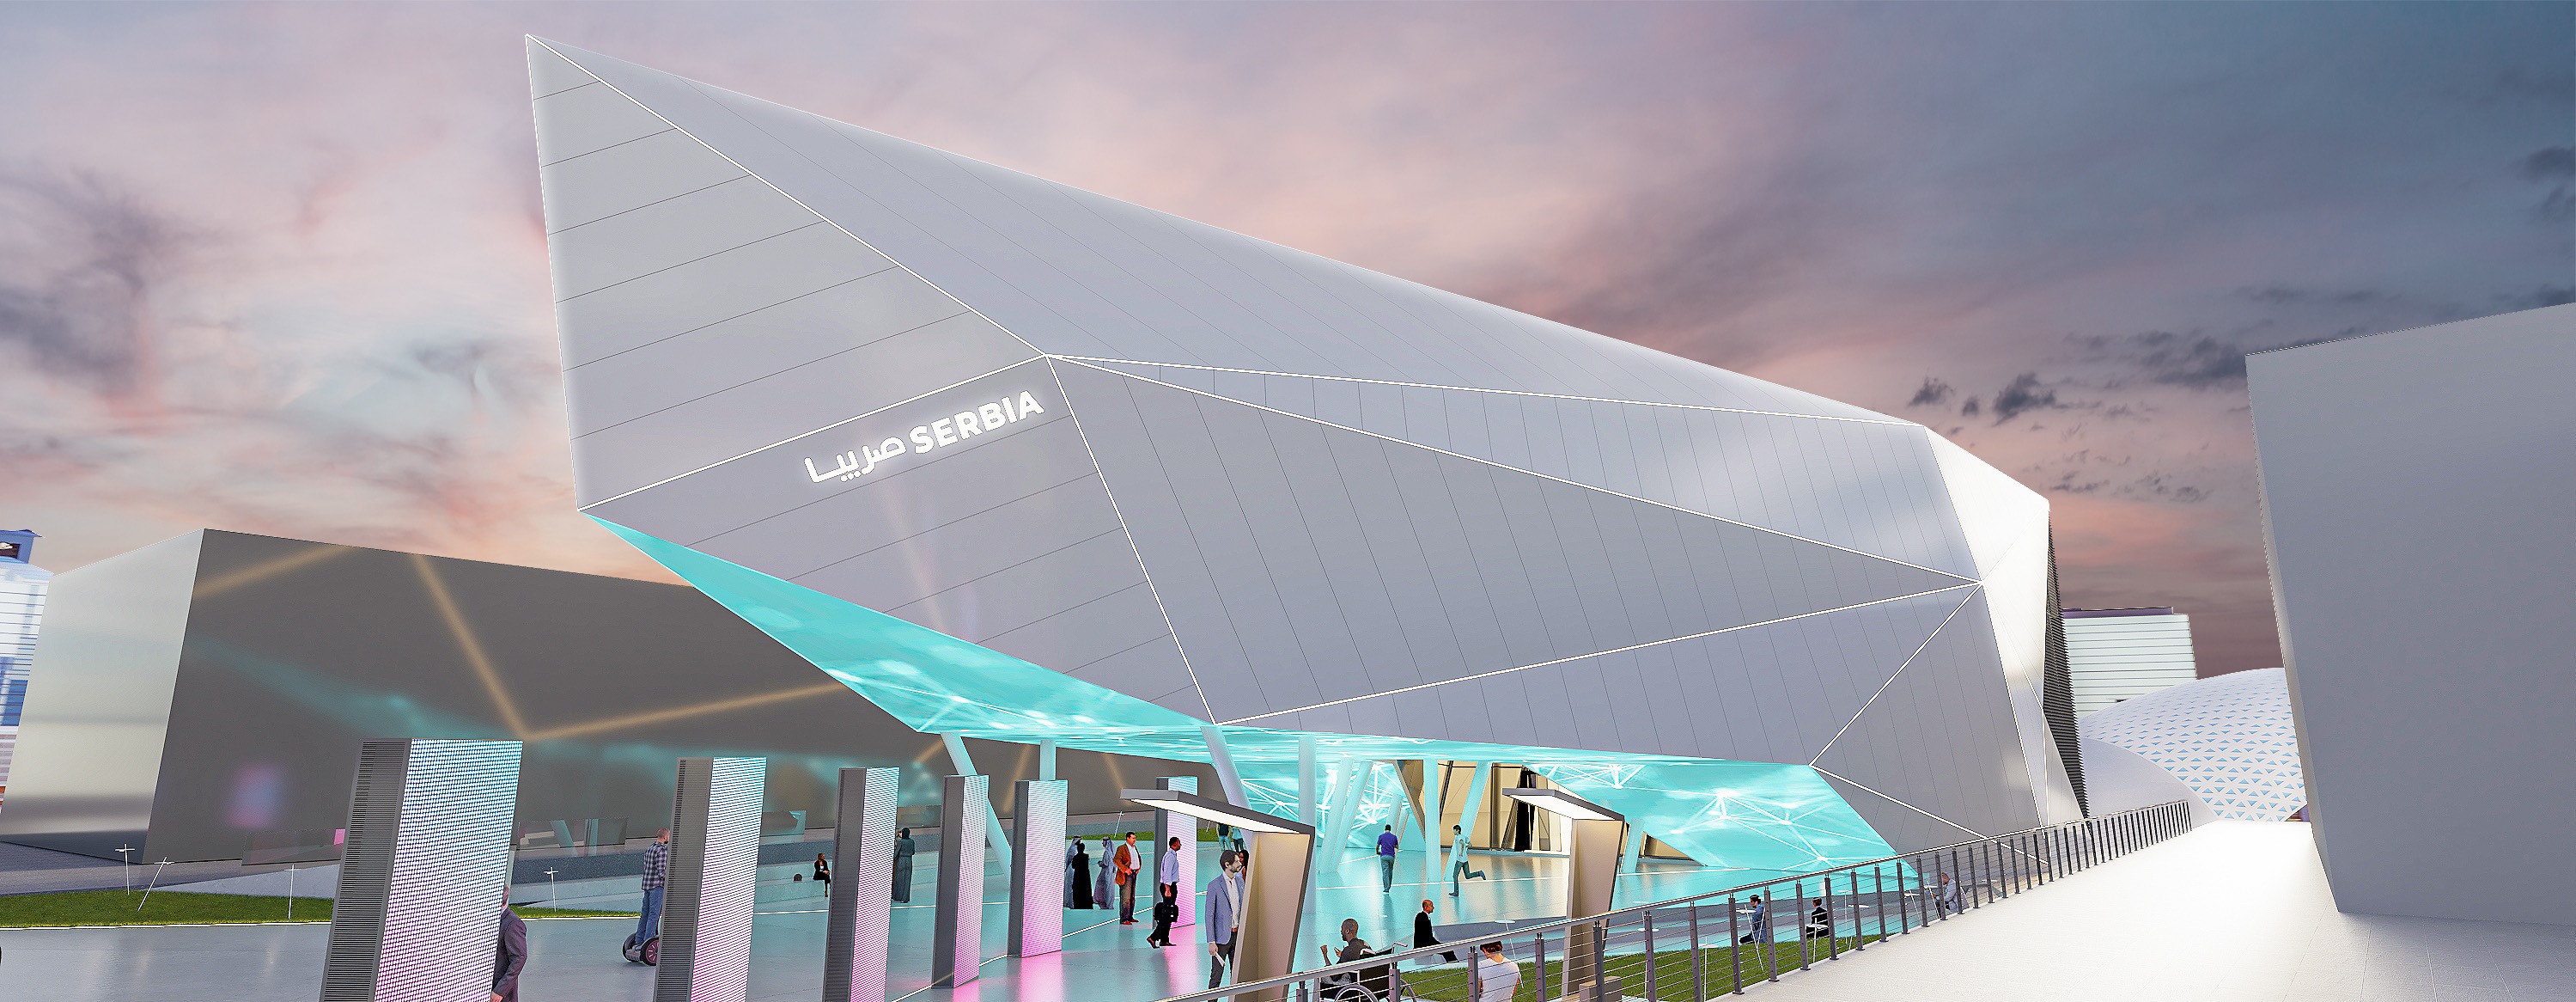 Srpski paviljon na Dubai EXPO.jpg